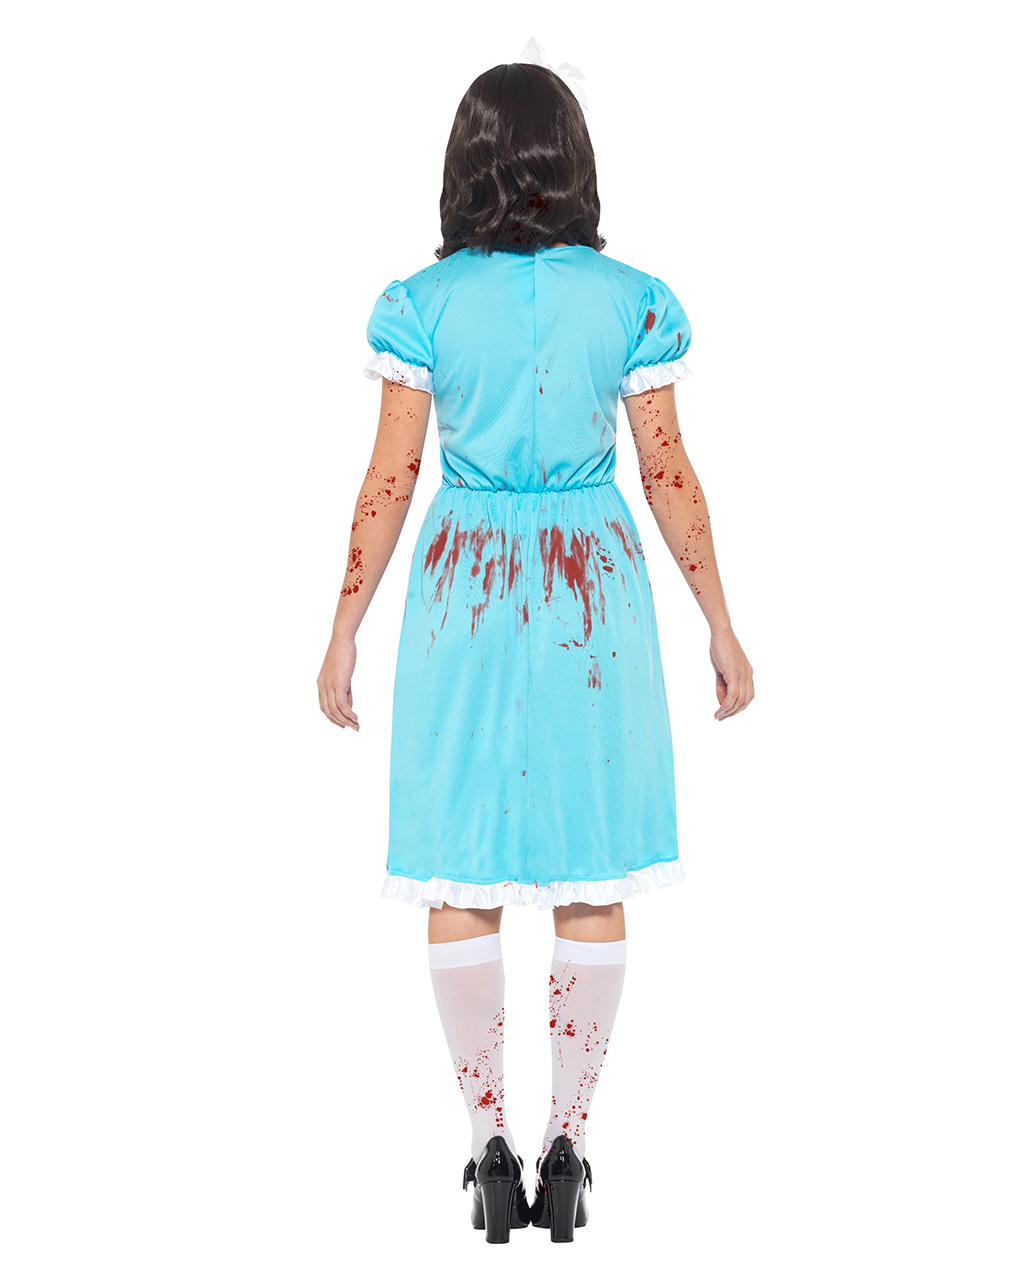 Orl blutiges Beil zu Horror Mörder Kostüm an Halloween Karneval Fasching 